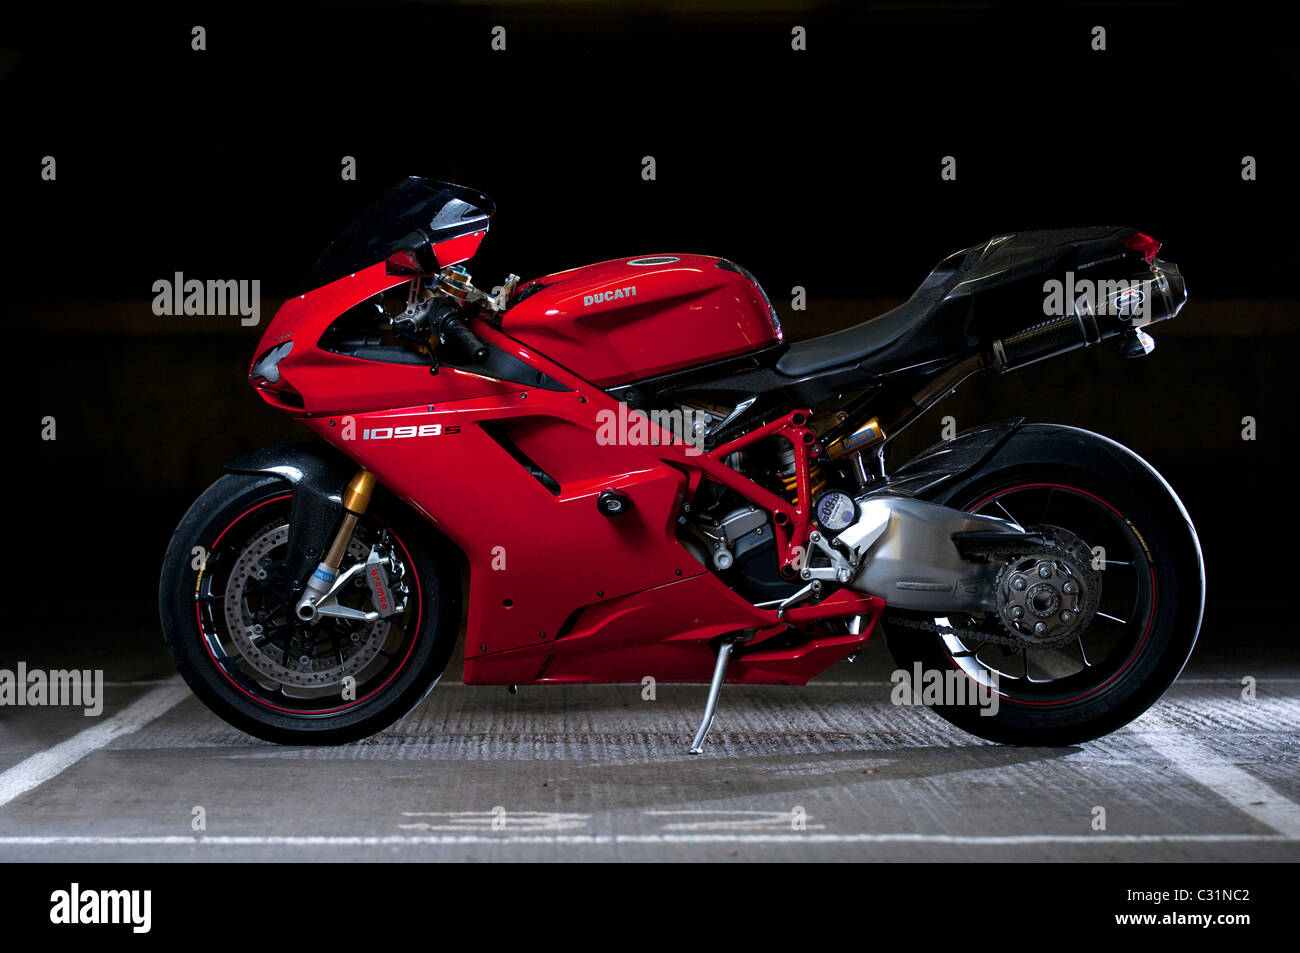 Ducati 1098s side shot at night Stock Photo